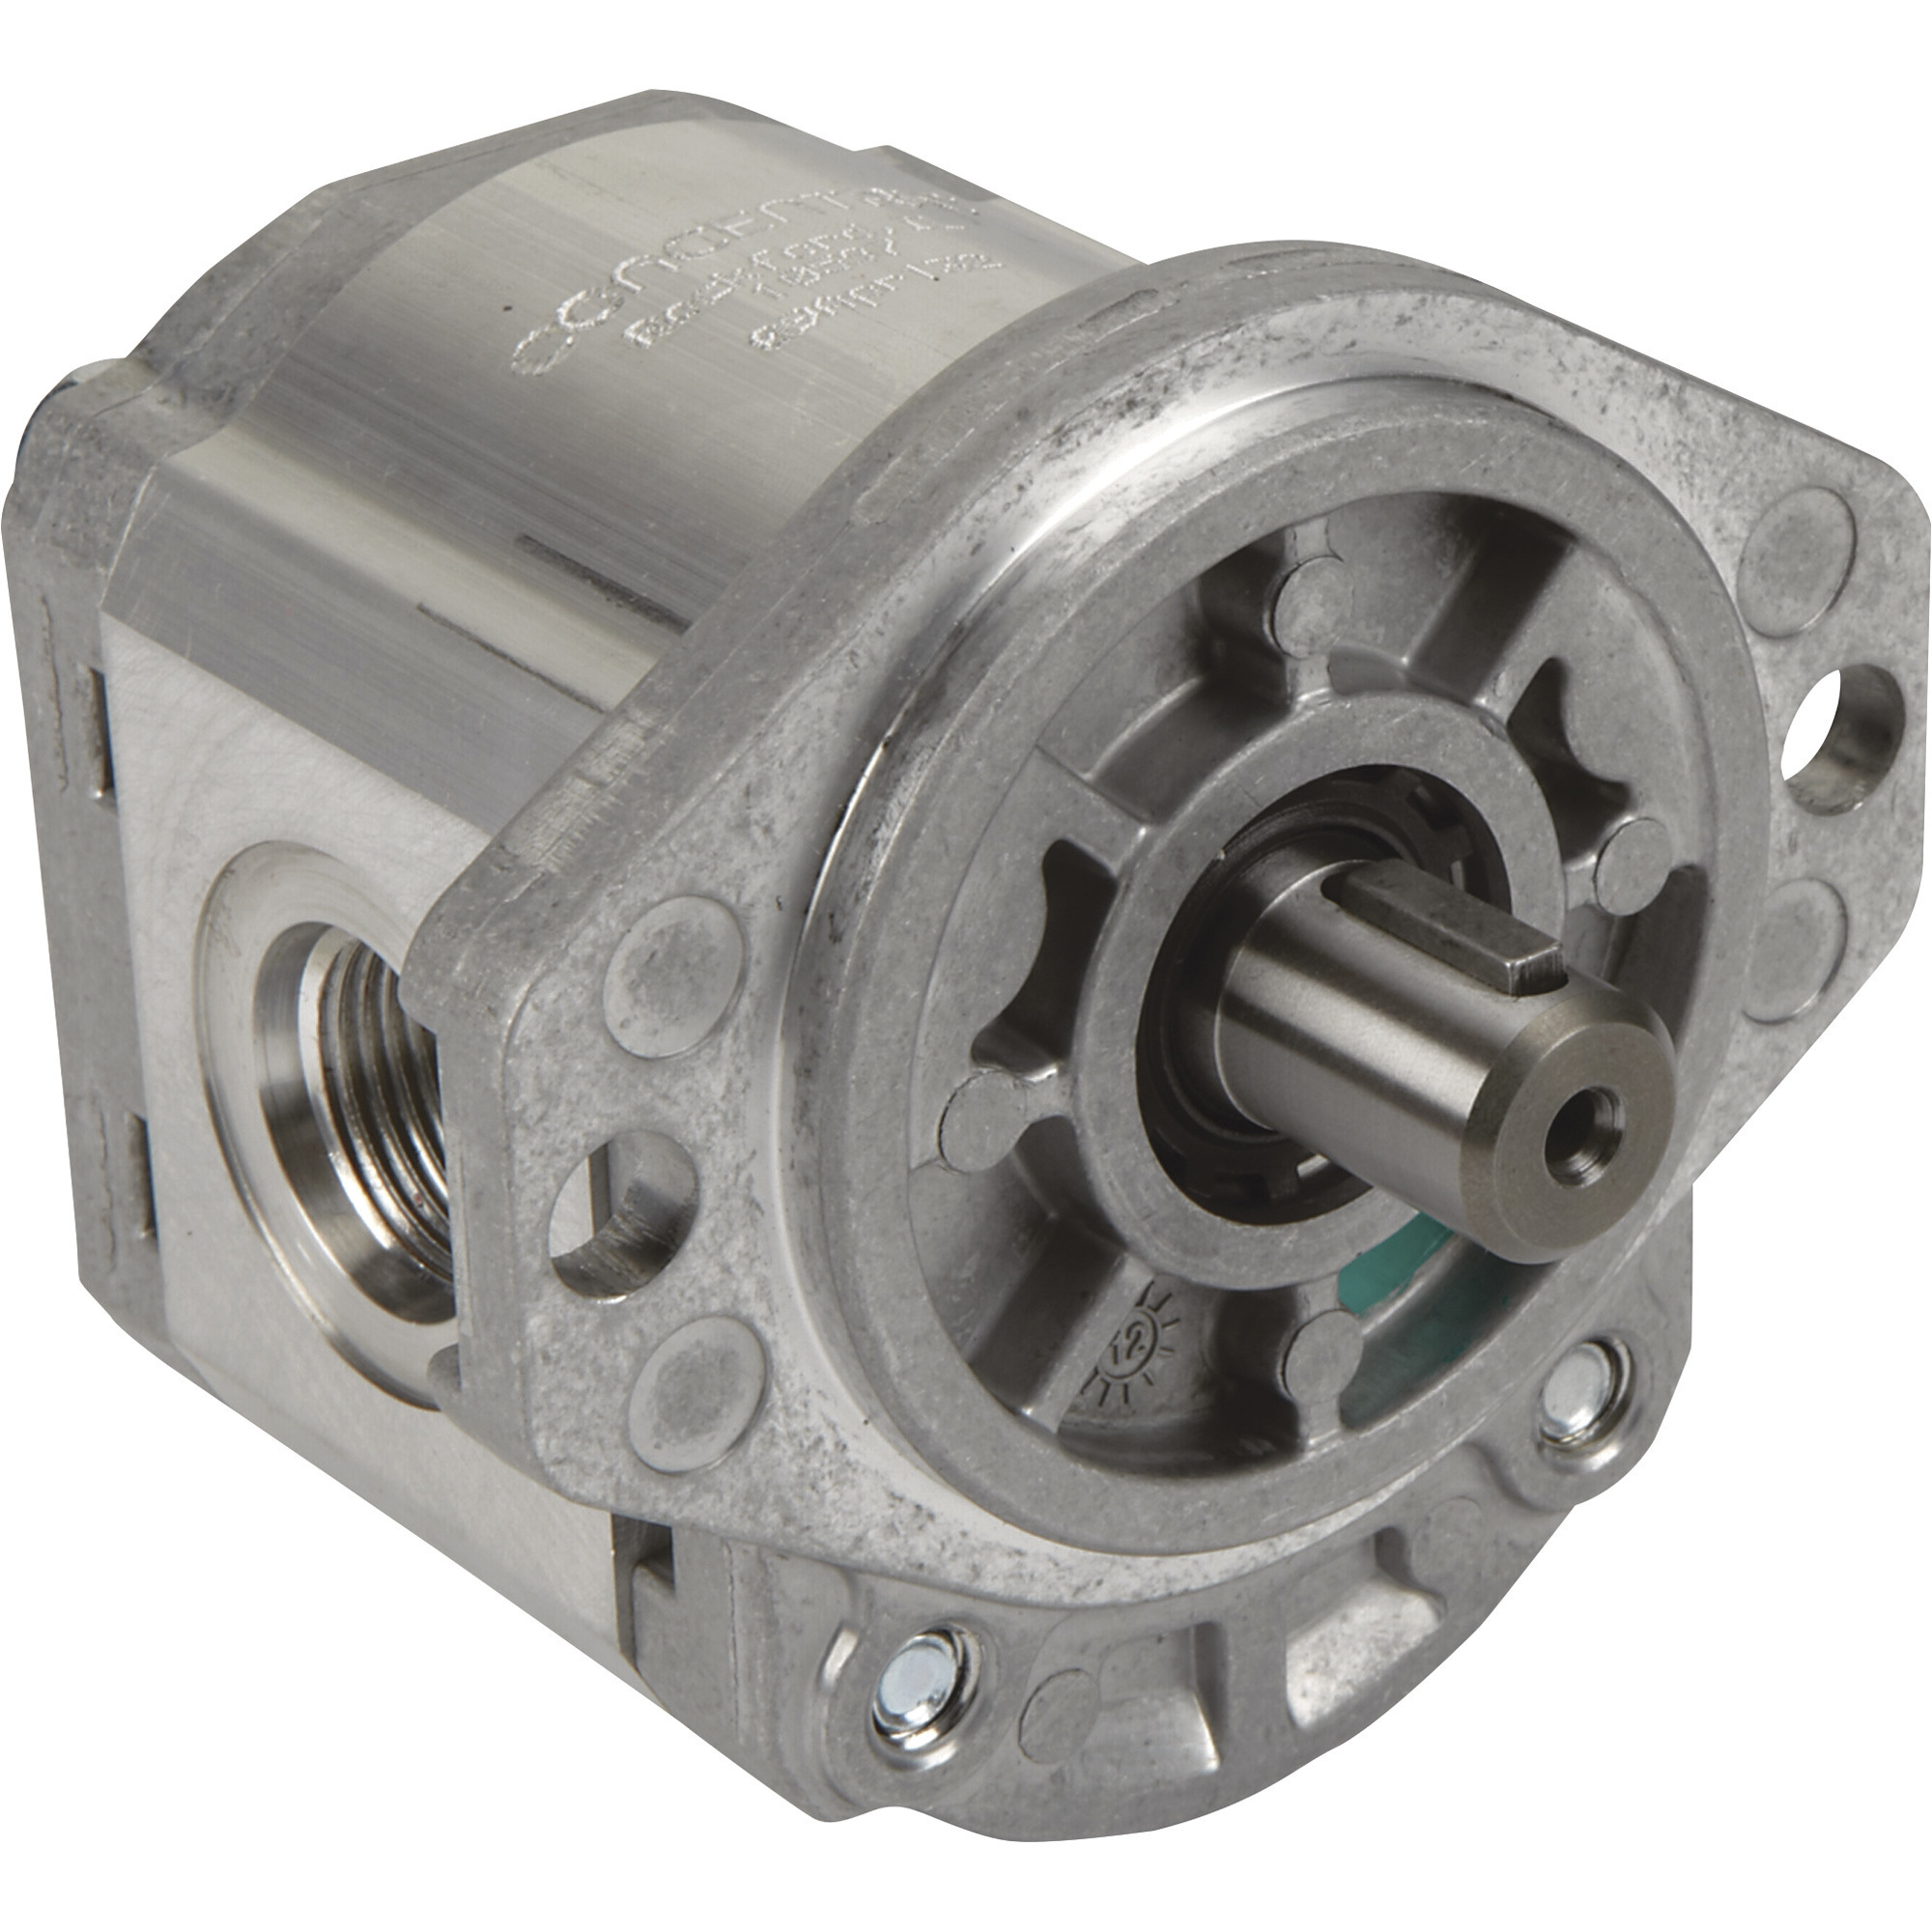 Concentric Hydraulic Birotational Gear Motor, 3,200 PSI, 2,800 Max. RPMs, Model WM09A1C230B-03BA109N